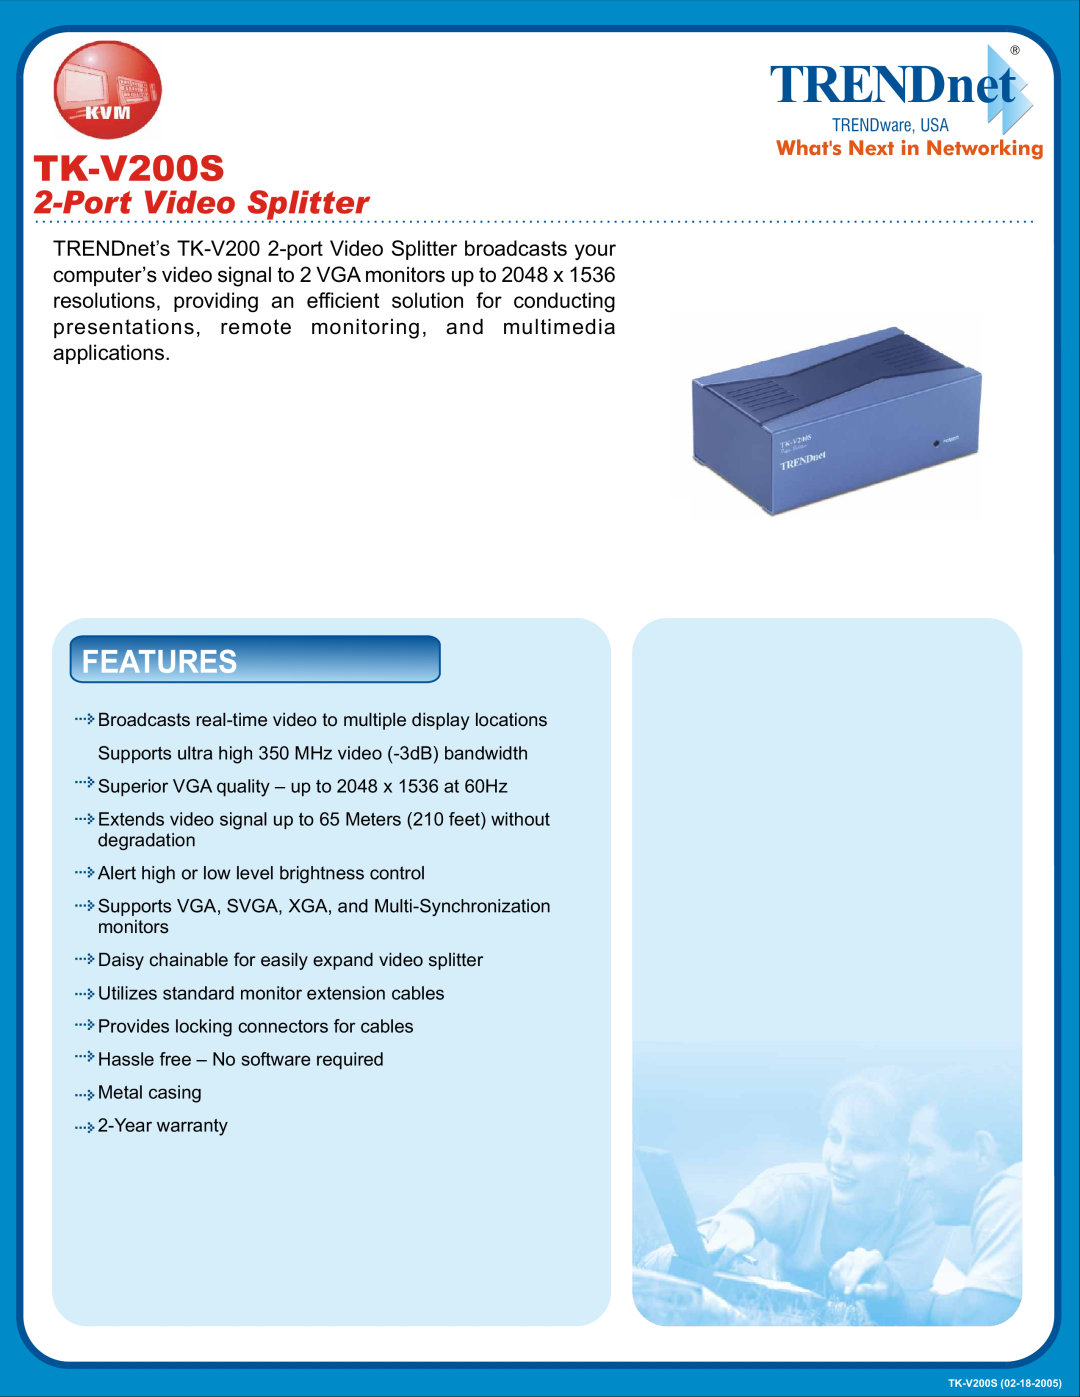 TRENDnet 2-Port Video Splitter warranty Features, TRENDnet, TK-V200S, Whats Next in Networking 